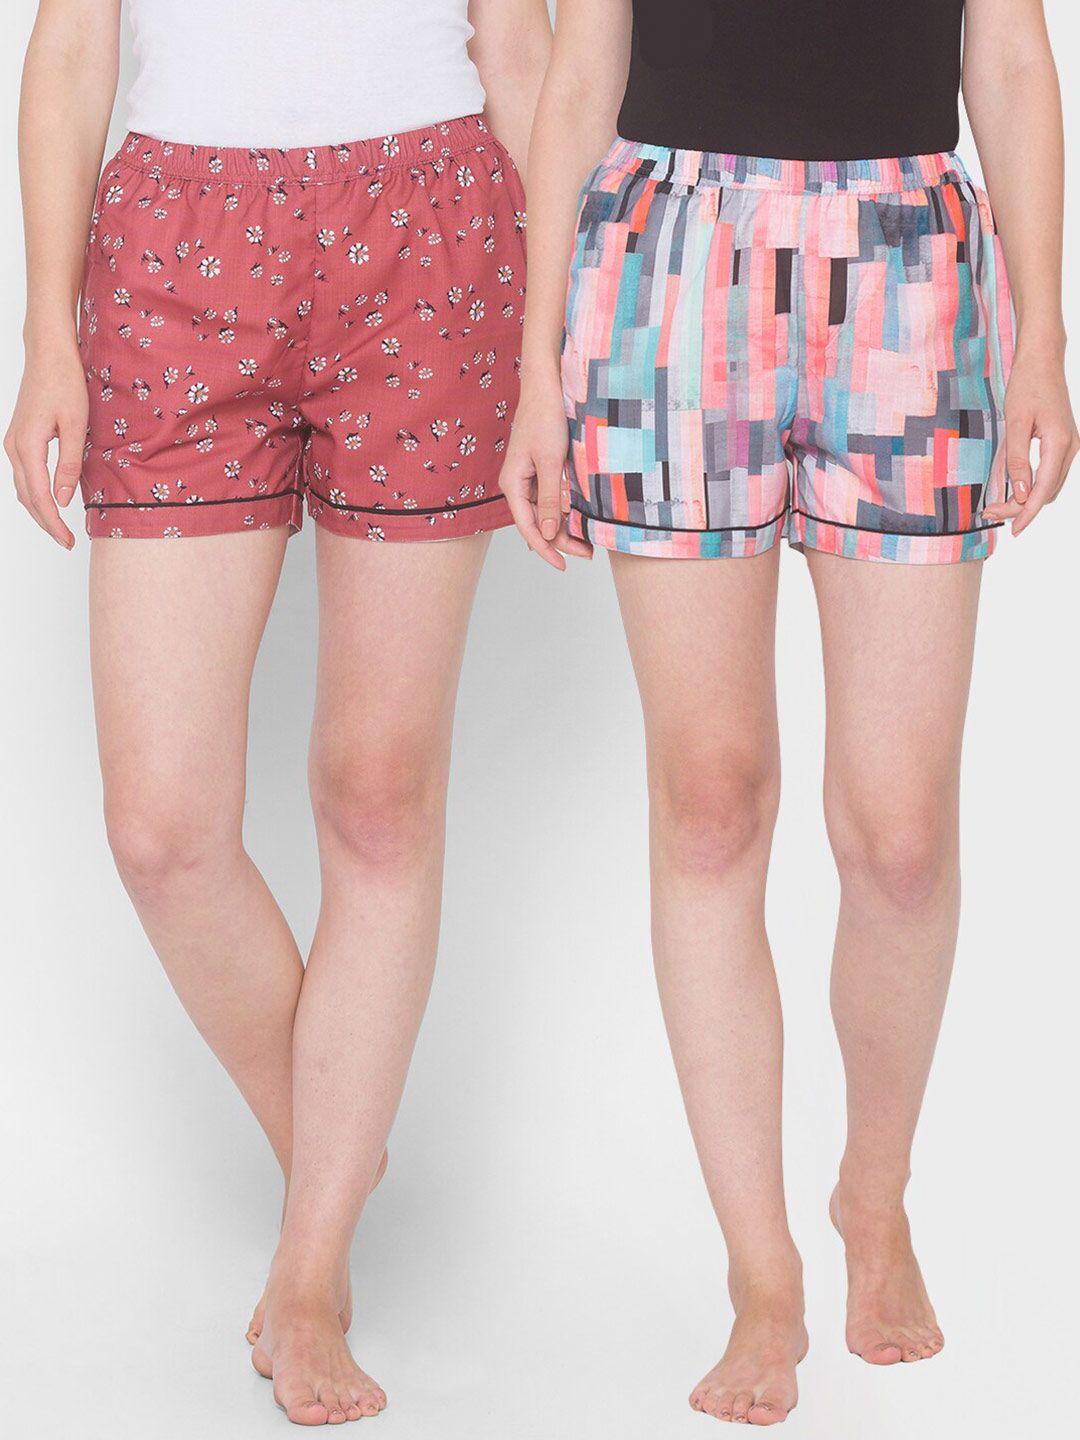 fashionrack-women-set-of-2-red-&-blue-printed-lounge-shorts